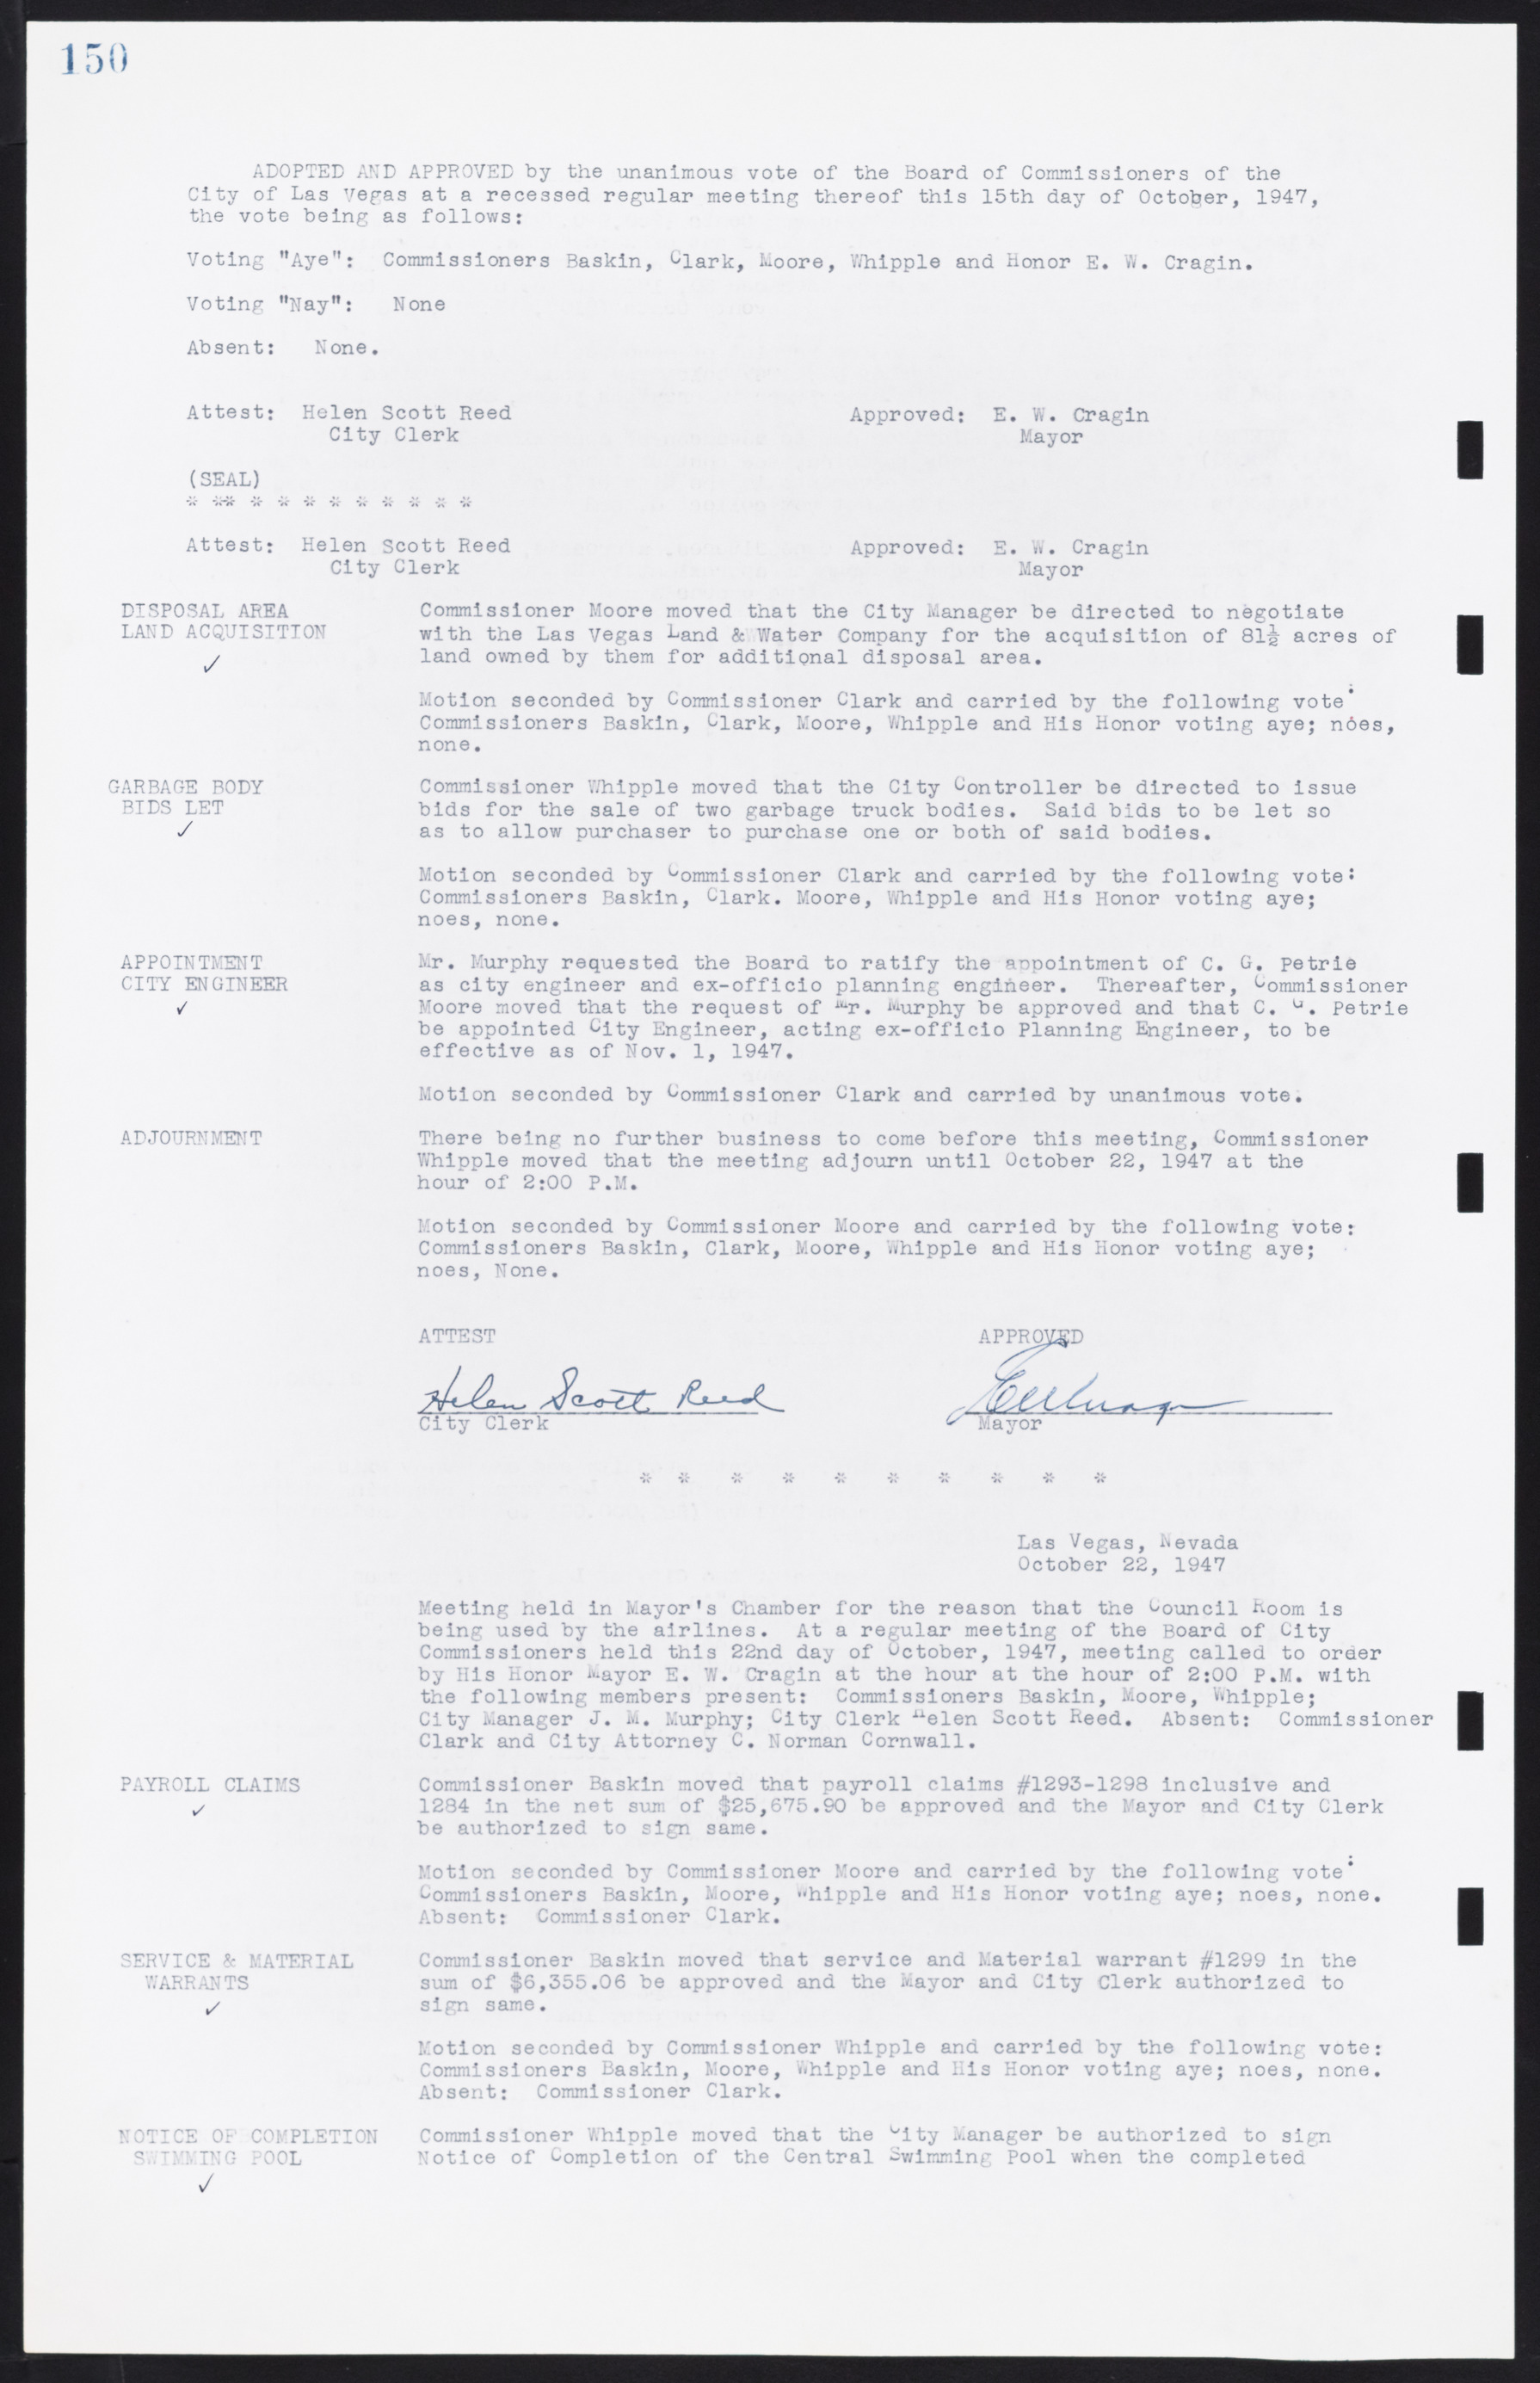 Las Vegas City Commission Minutes, January 7, 1947 to October 26, 1949, lvc000006-169